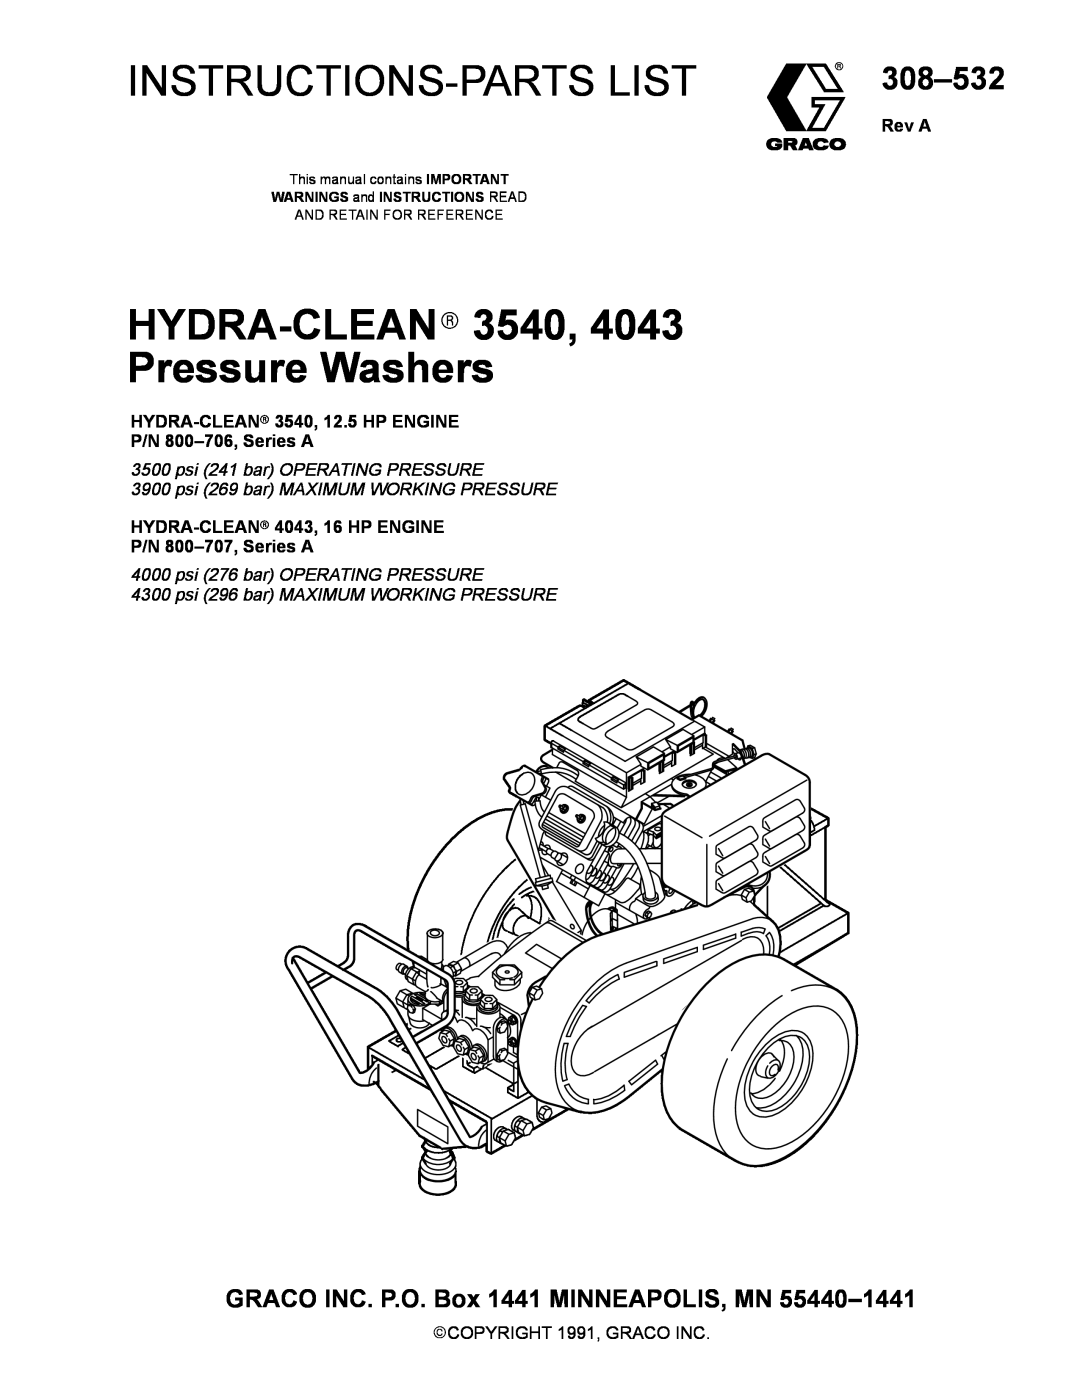 Graco Inc 800-706 manual HYDRA-CLEAN 3540 Pressure Washers, 308-532, GRACO INC. P.O. Box 1441 MINNEAPOLIS, MN, Rev A 